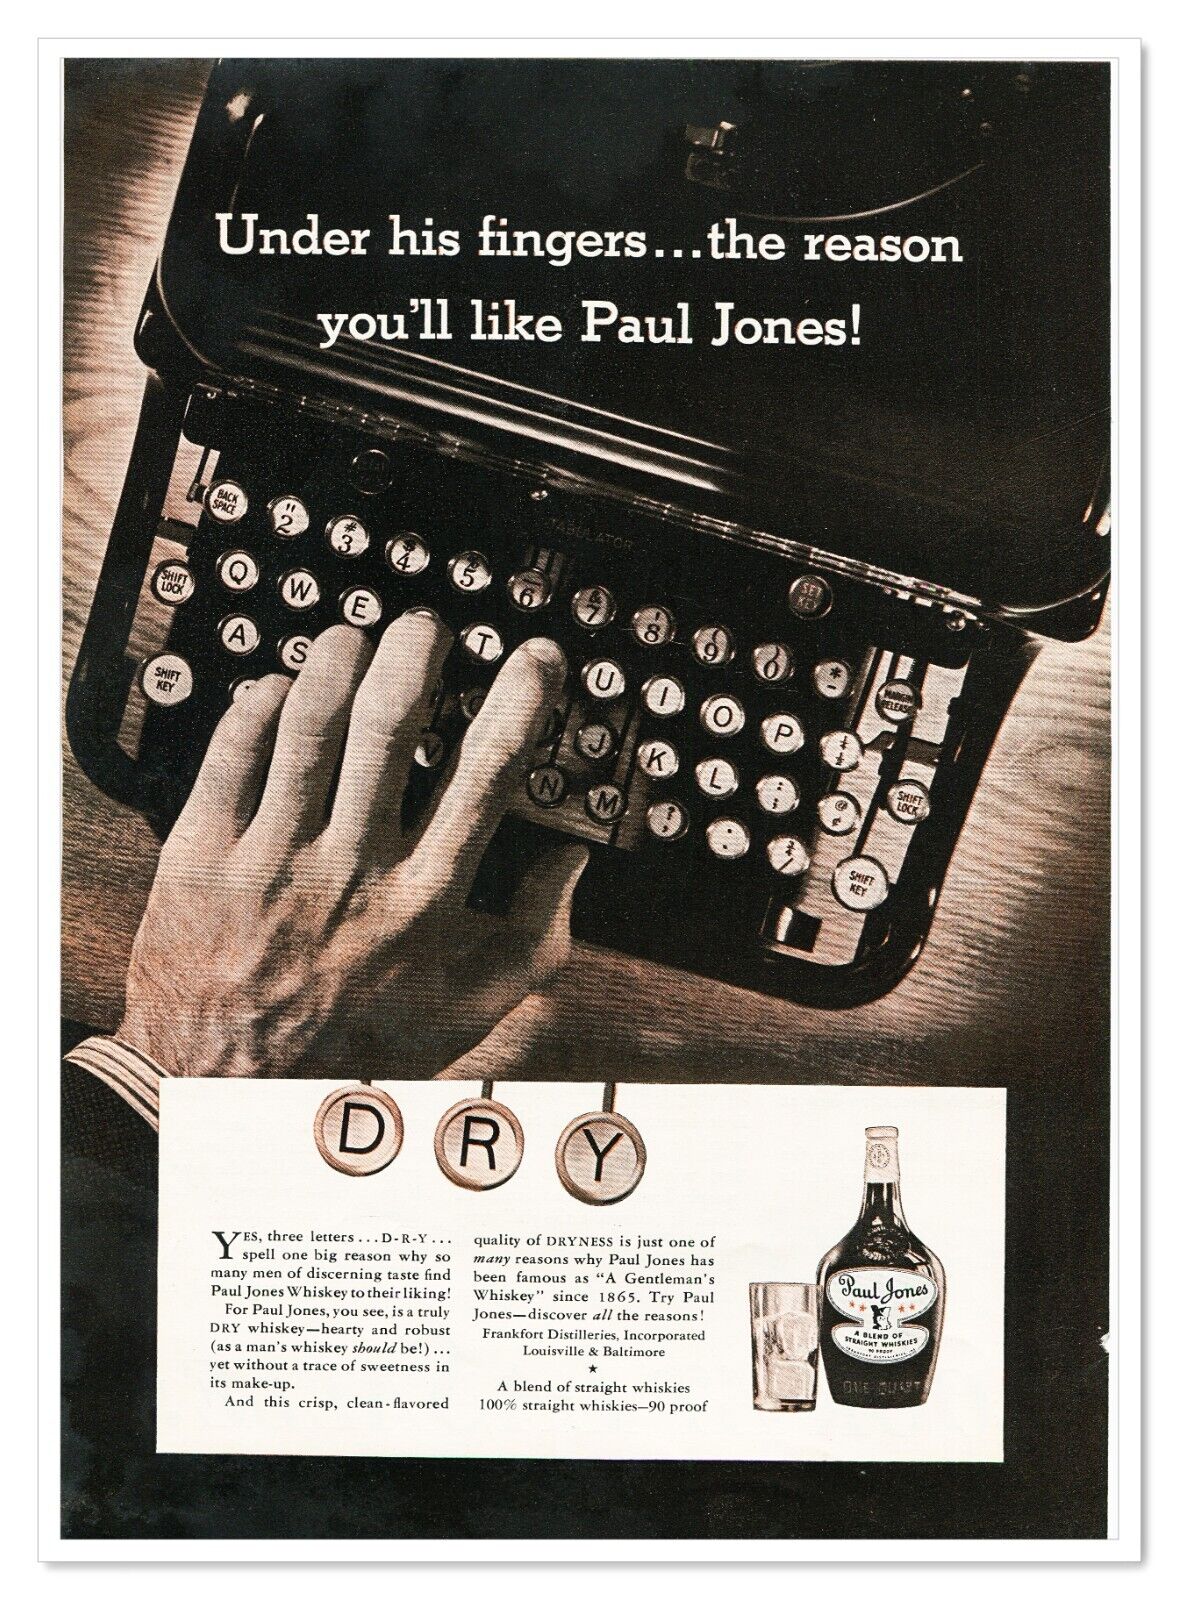 Print Ad Paul Jones Whiskey Typewriter Dry Vintage 1938 Advertisement